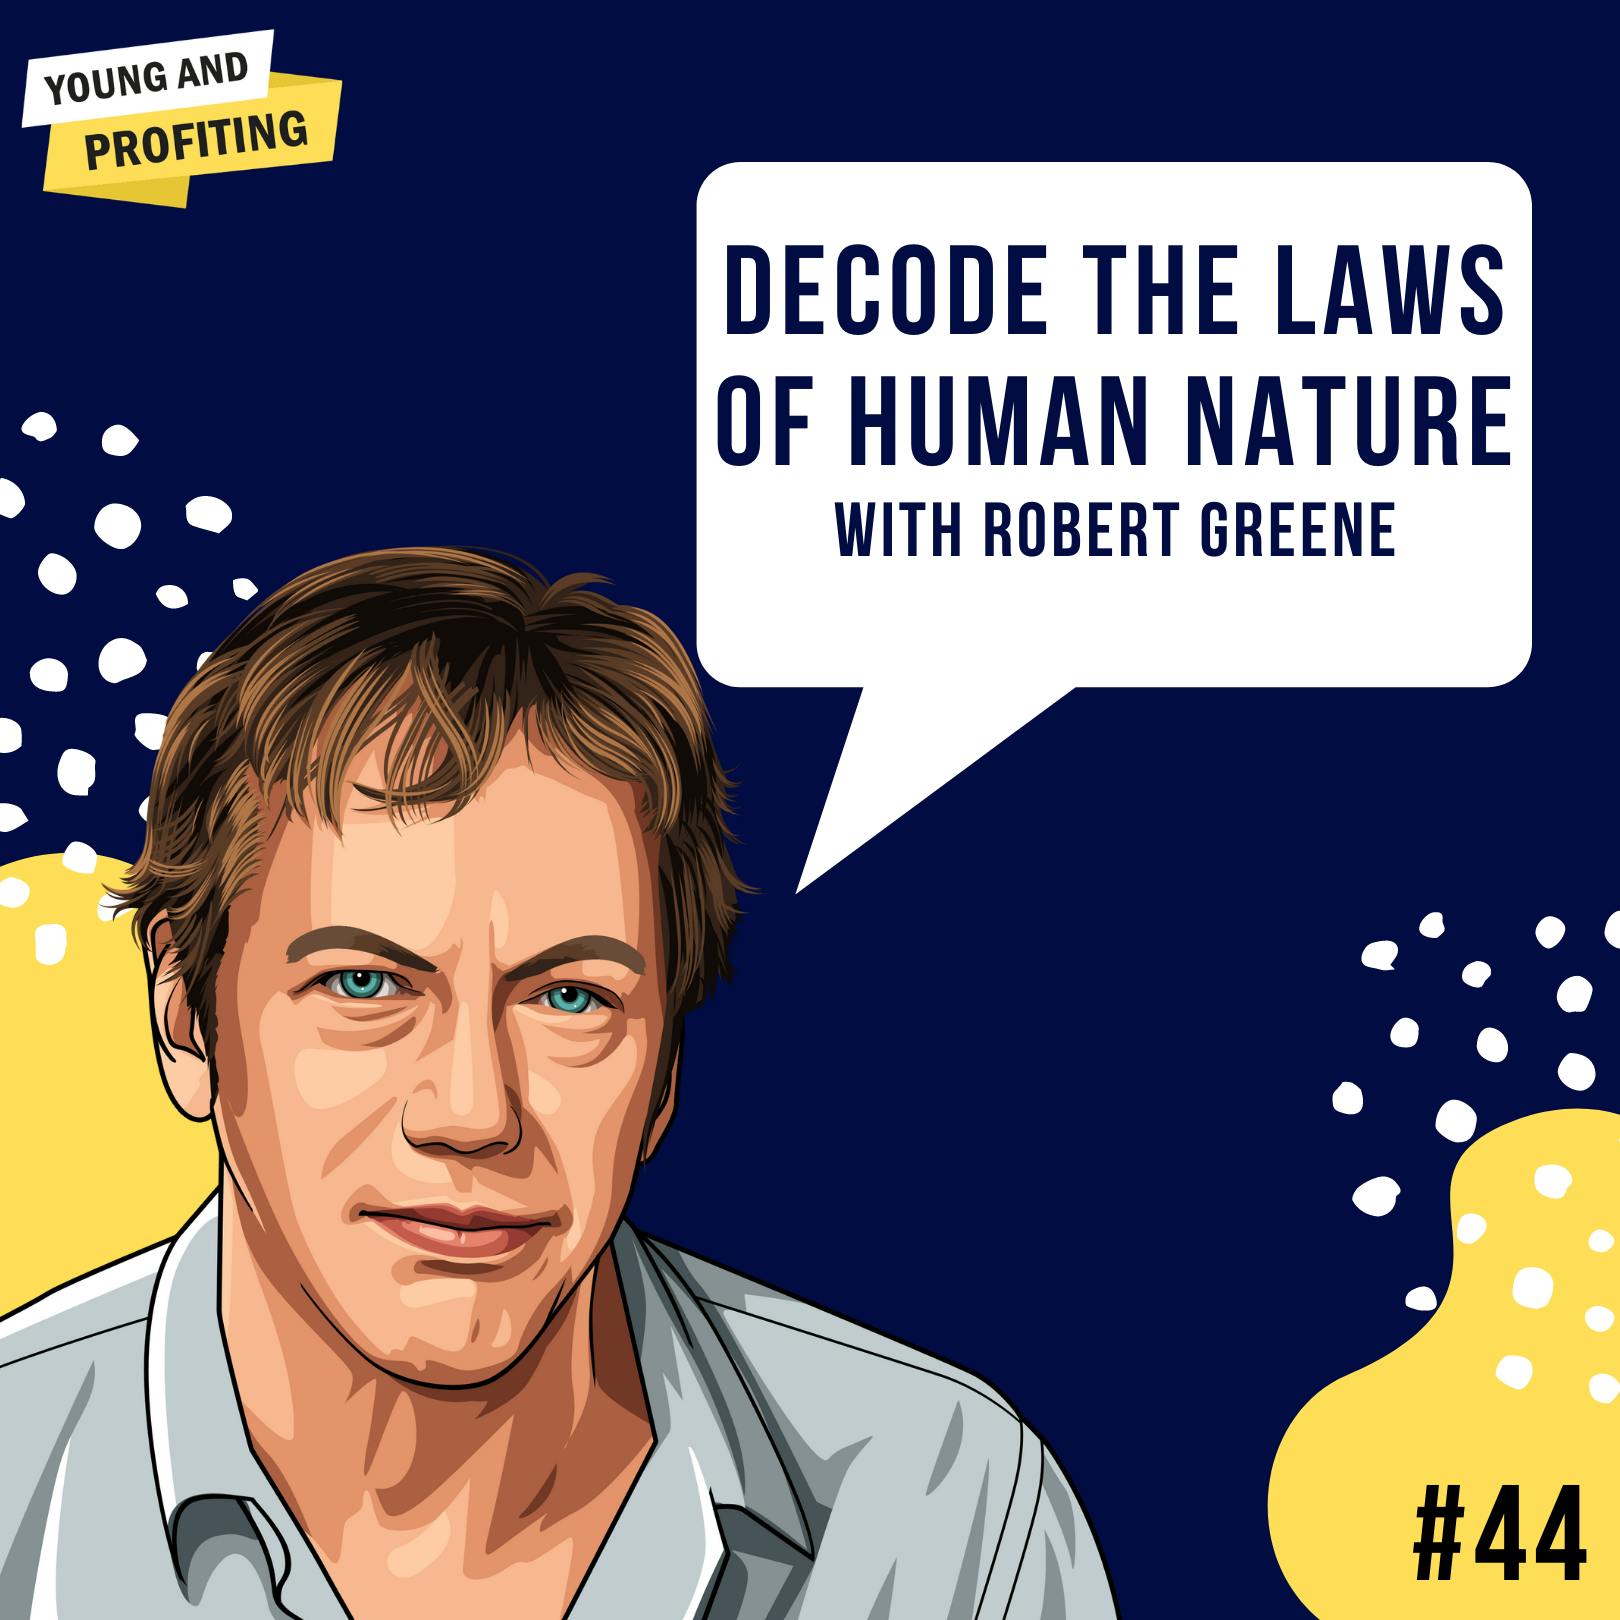 Robert Greene [Part 2]: Decoding the Laws of Human Nature | E44 by Hala Taha | YAP Media Network